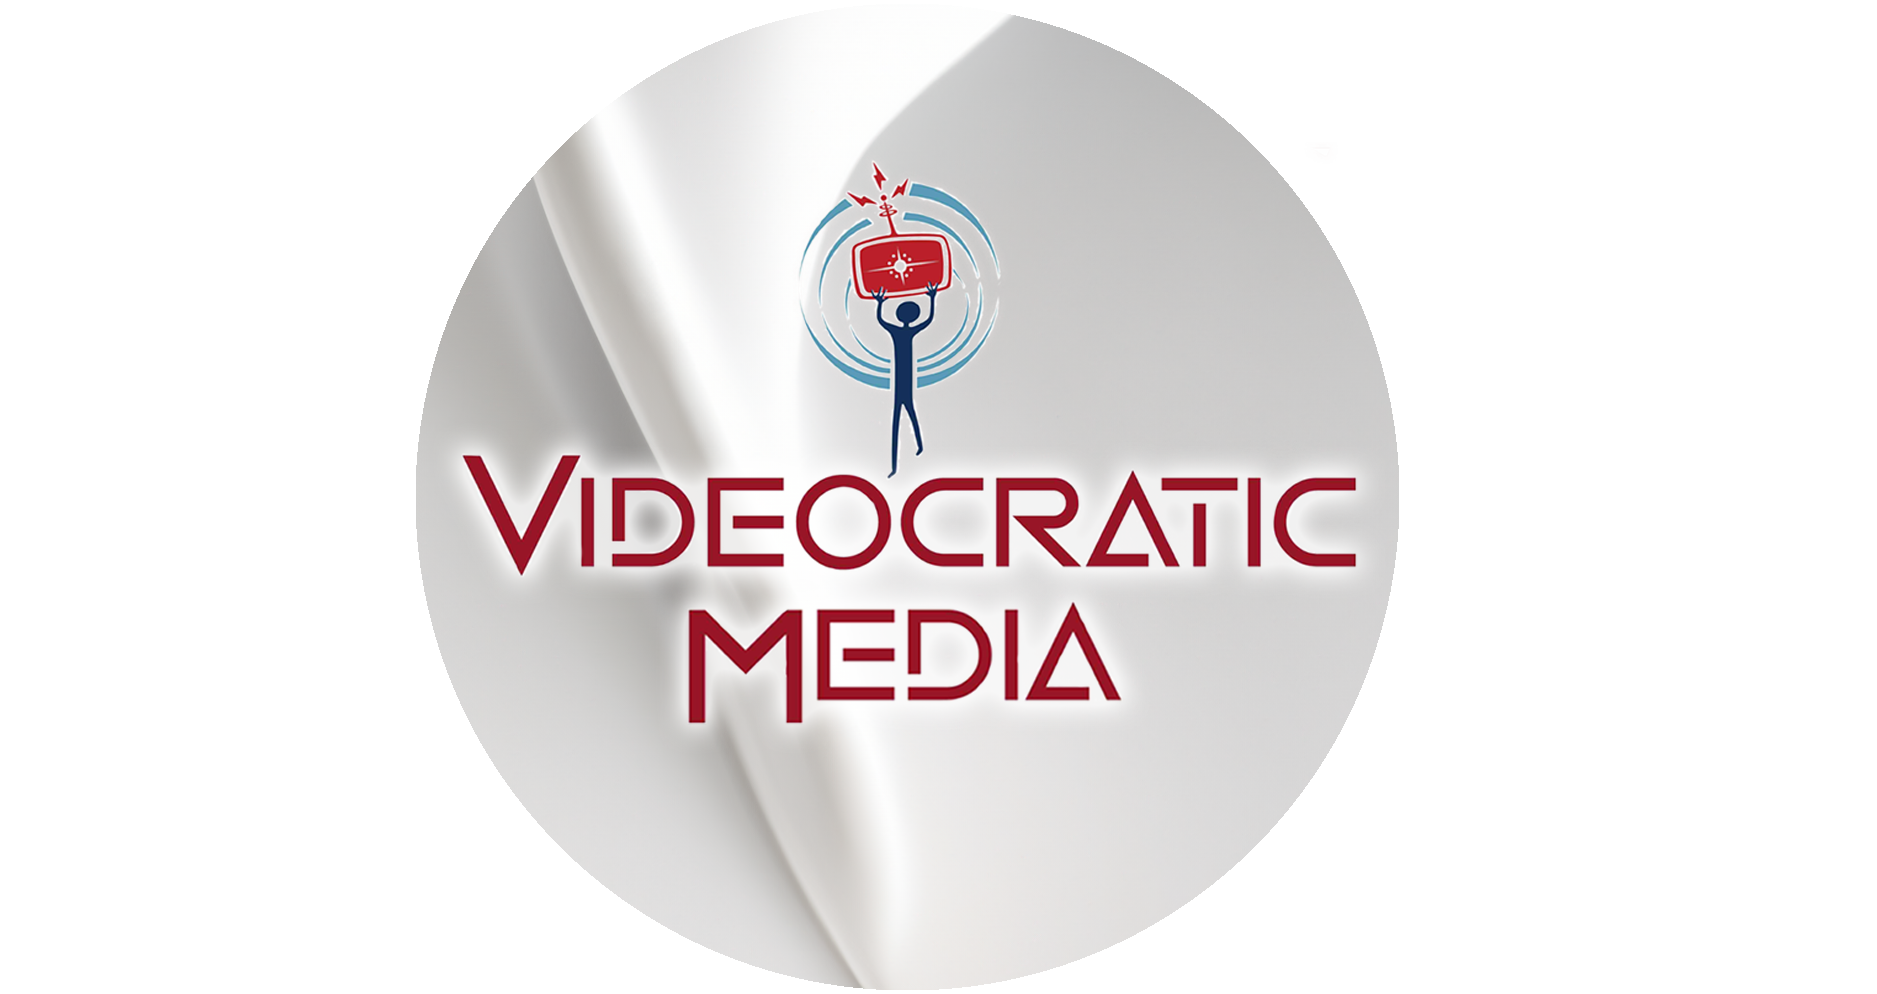 Videocratic Media - Creating Compelling Video Content